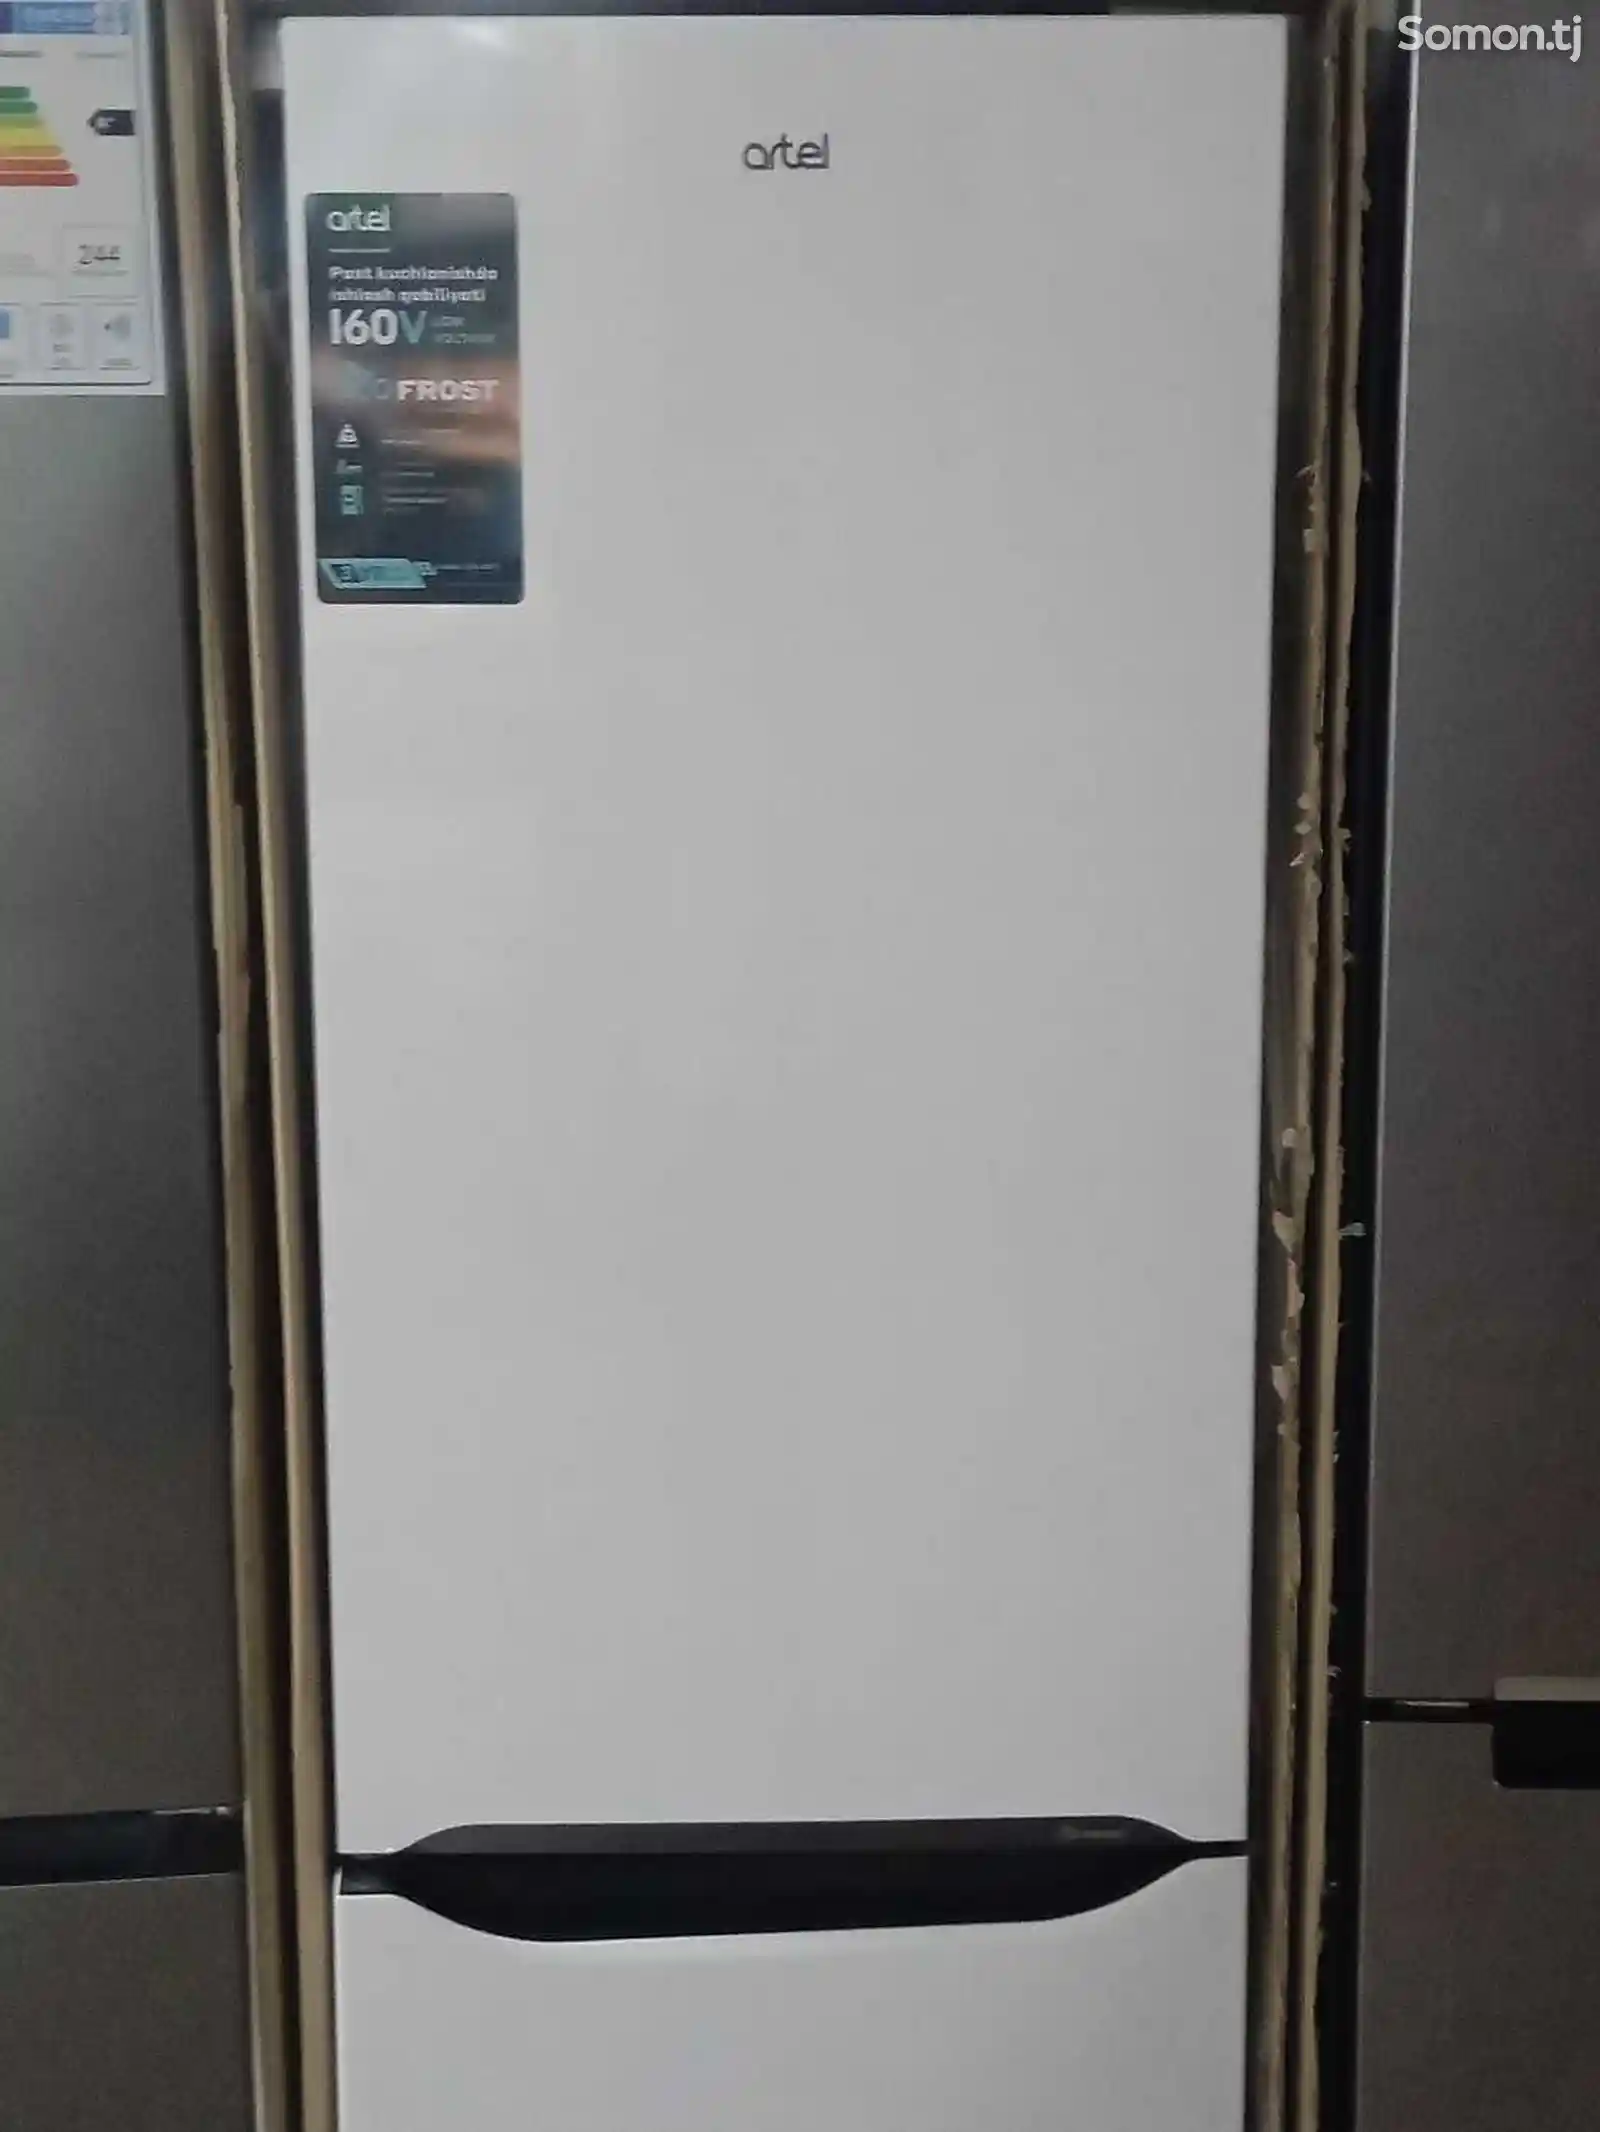 Холодильник Artel Inverter 160v-1